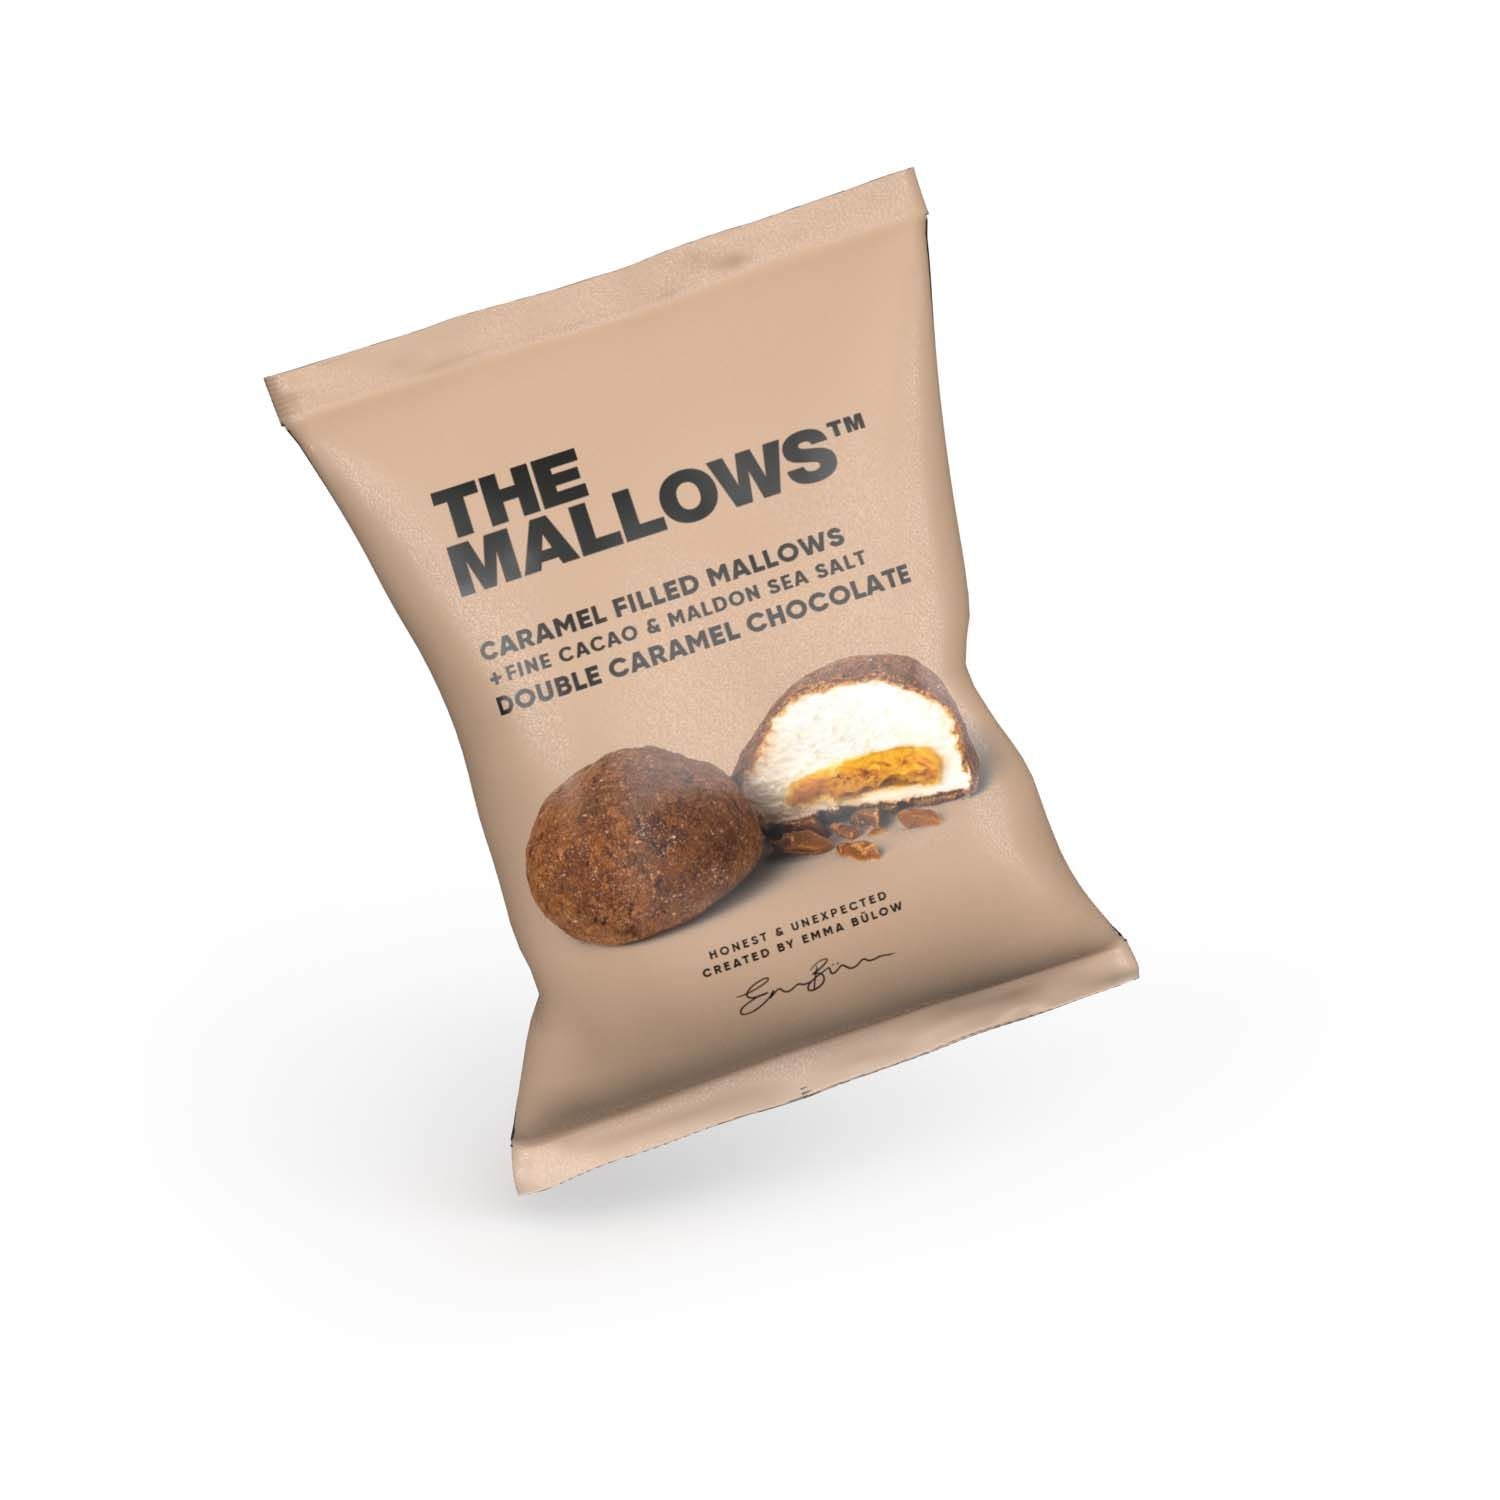 The Mallows Marshmallows med karamellfyllning & choklad dubbel karamellchoklad, 18g